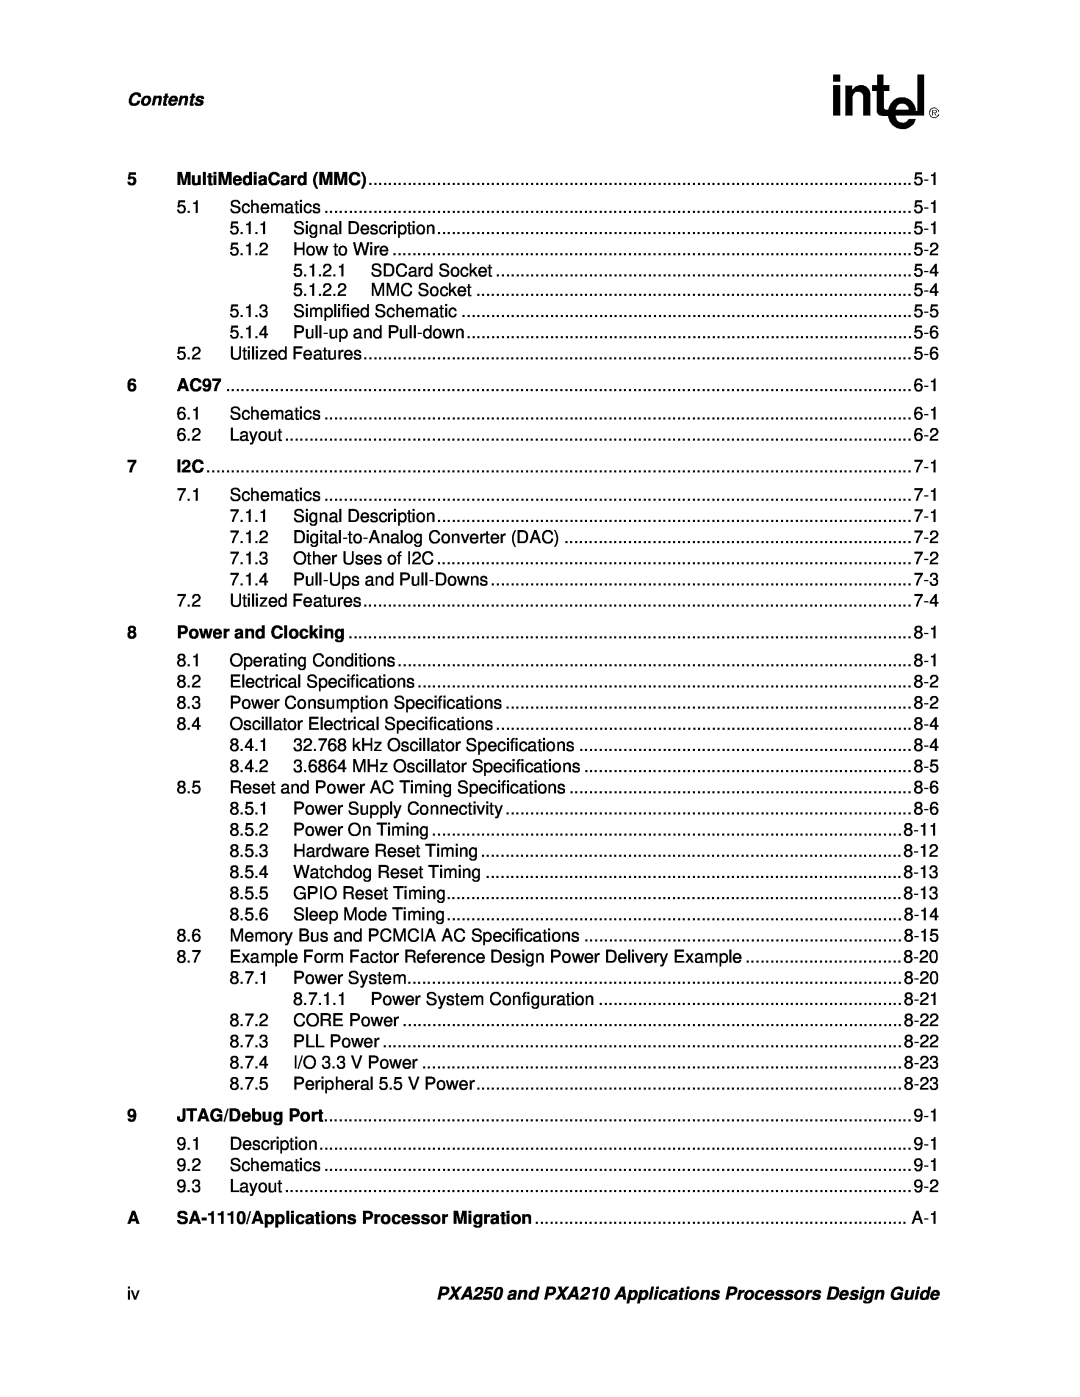 Intel manual Contents, MultiMediaCard MMC, AC97, PXA250 and PXA210 Applications Processors Design Guide 